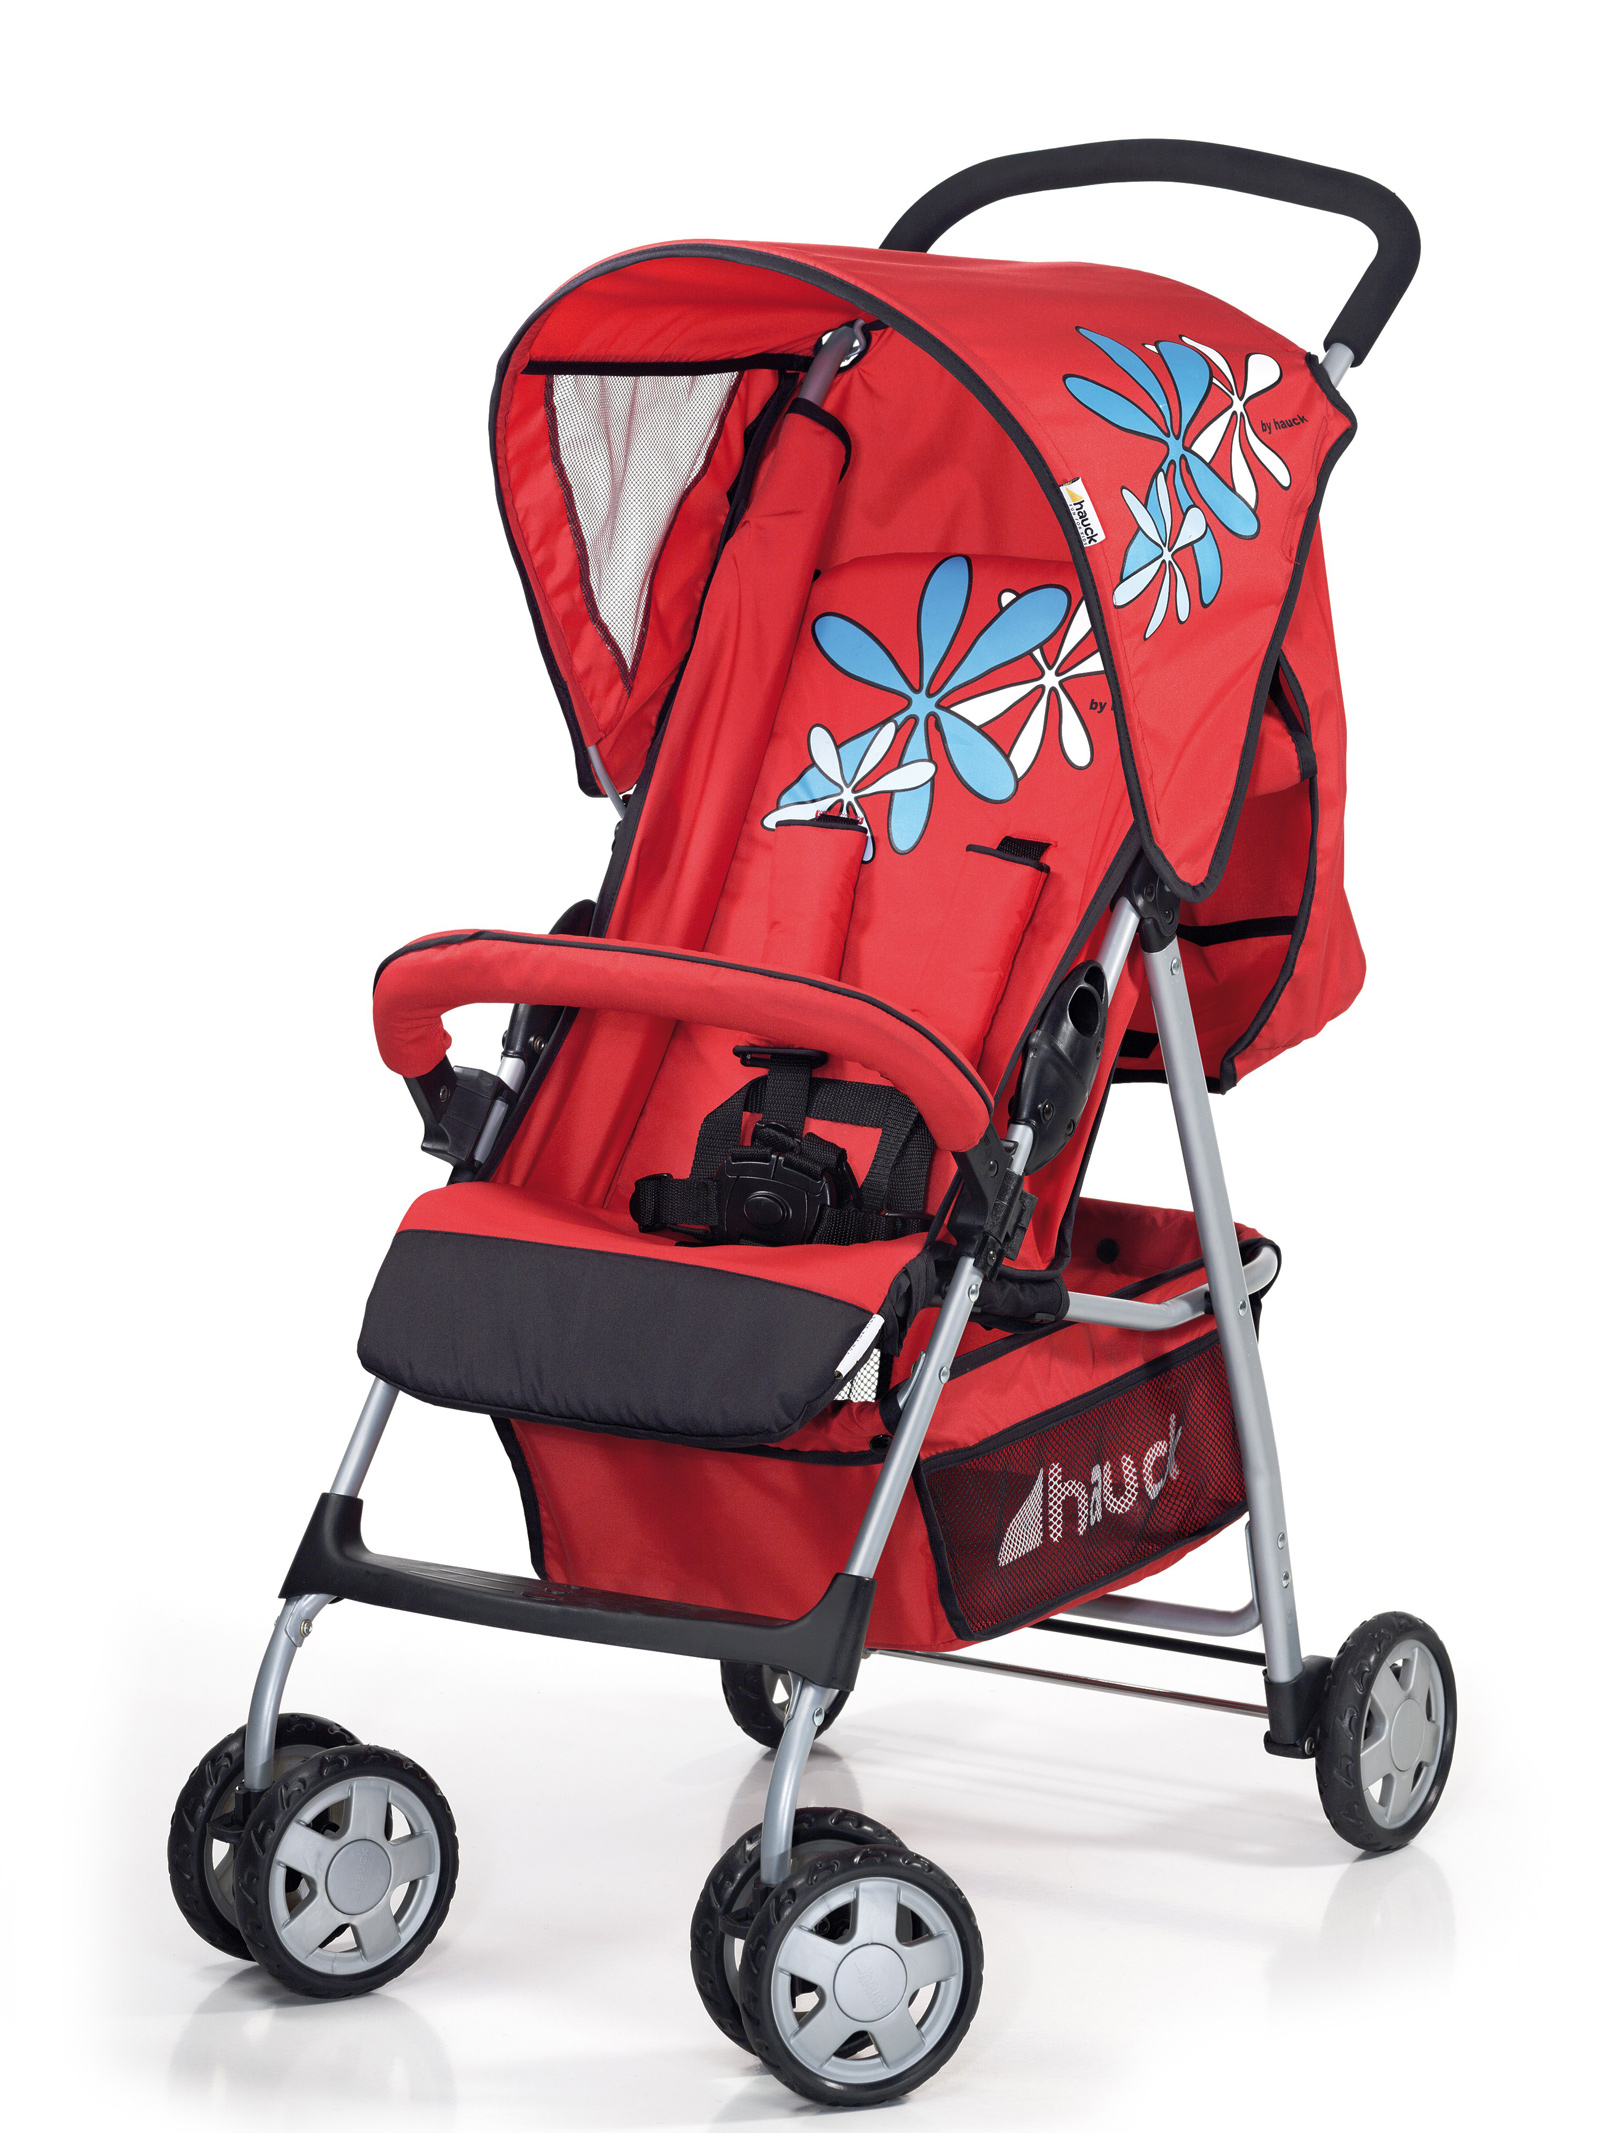 Hauck - Stroller Sport - Spring Red Stroller